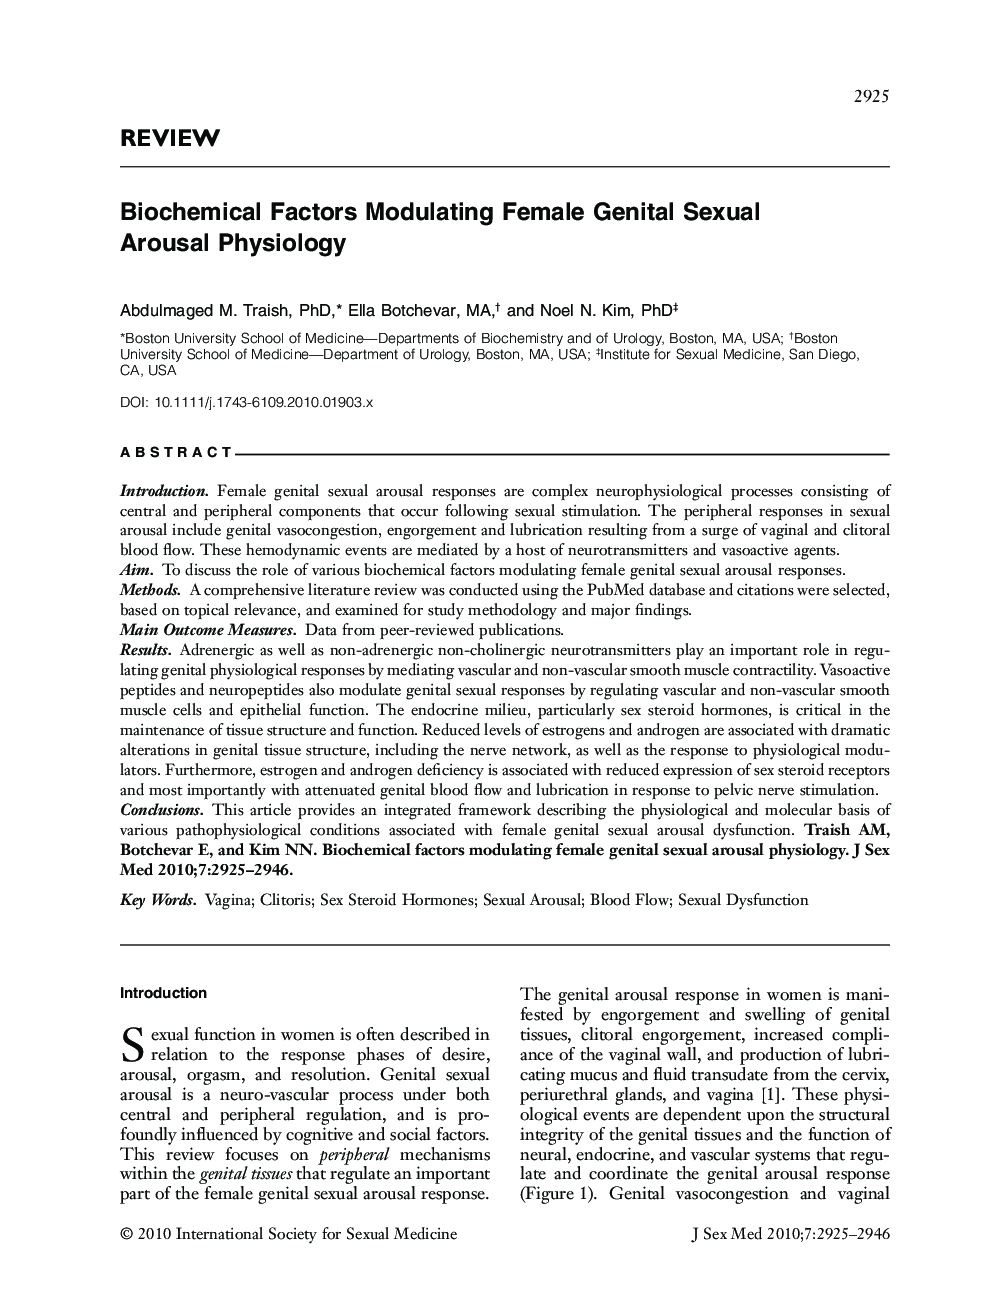 Biochemical Factors Modulating Female Genital Sexual Arousal Physiology